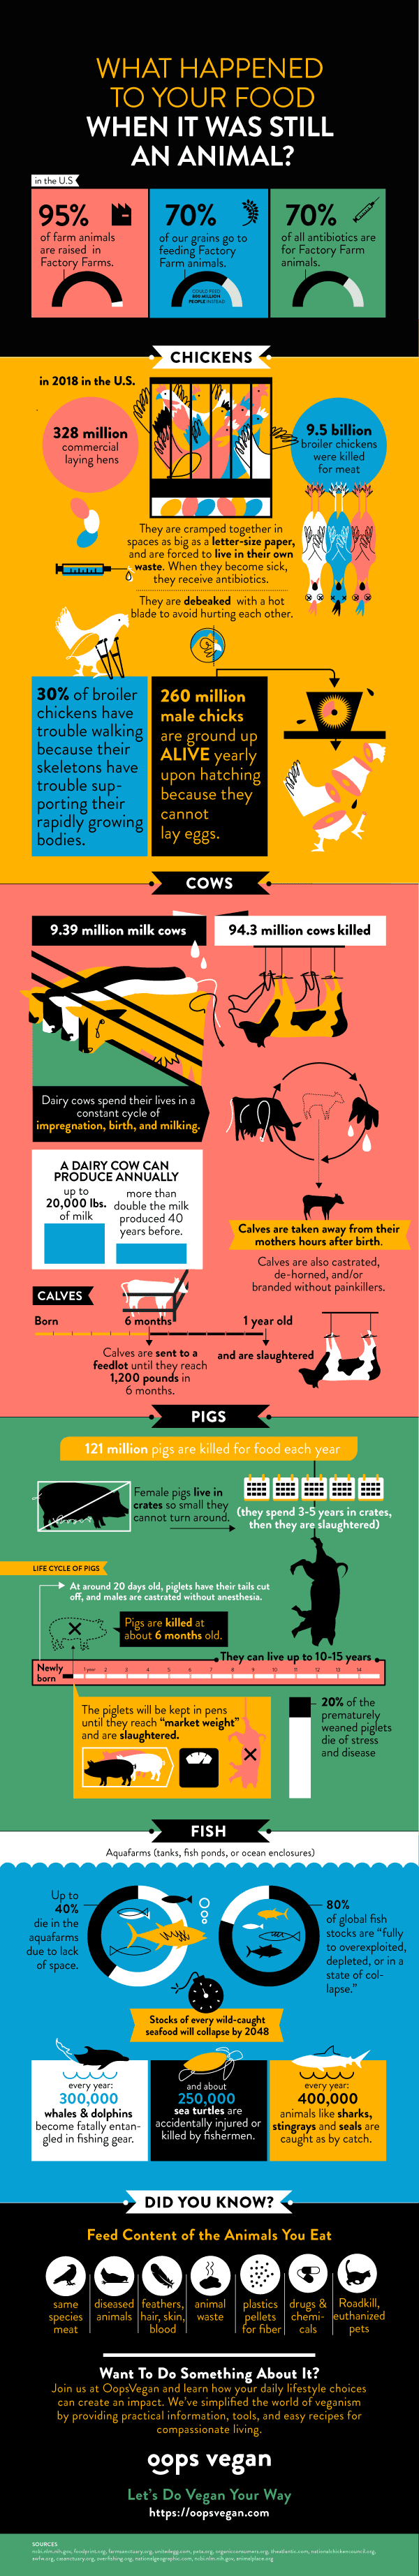 Animal Farm Factory Cruelty Infographic — Oops Vegan Lifestyle